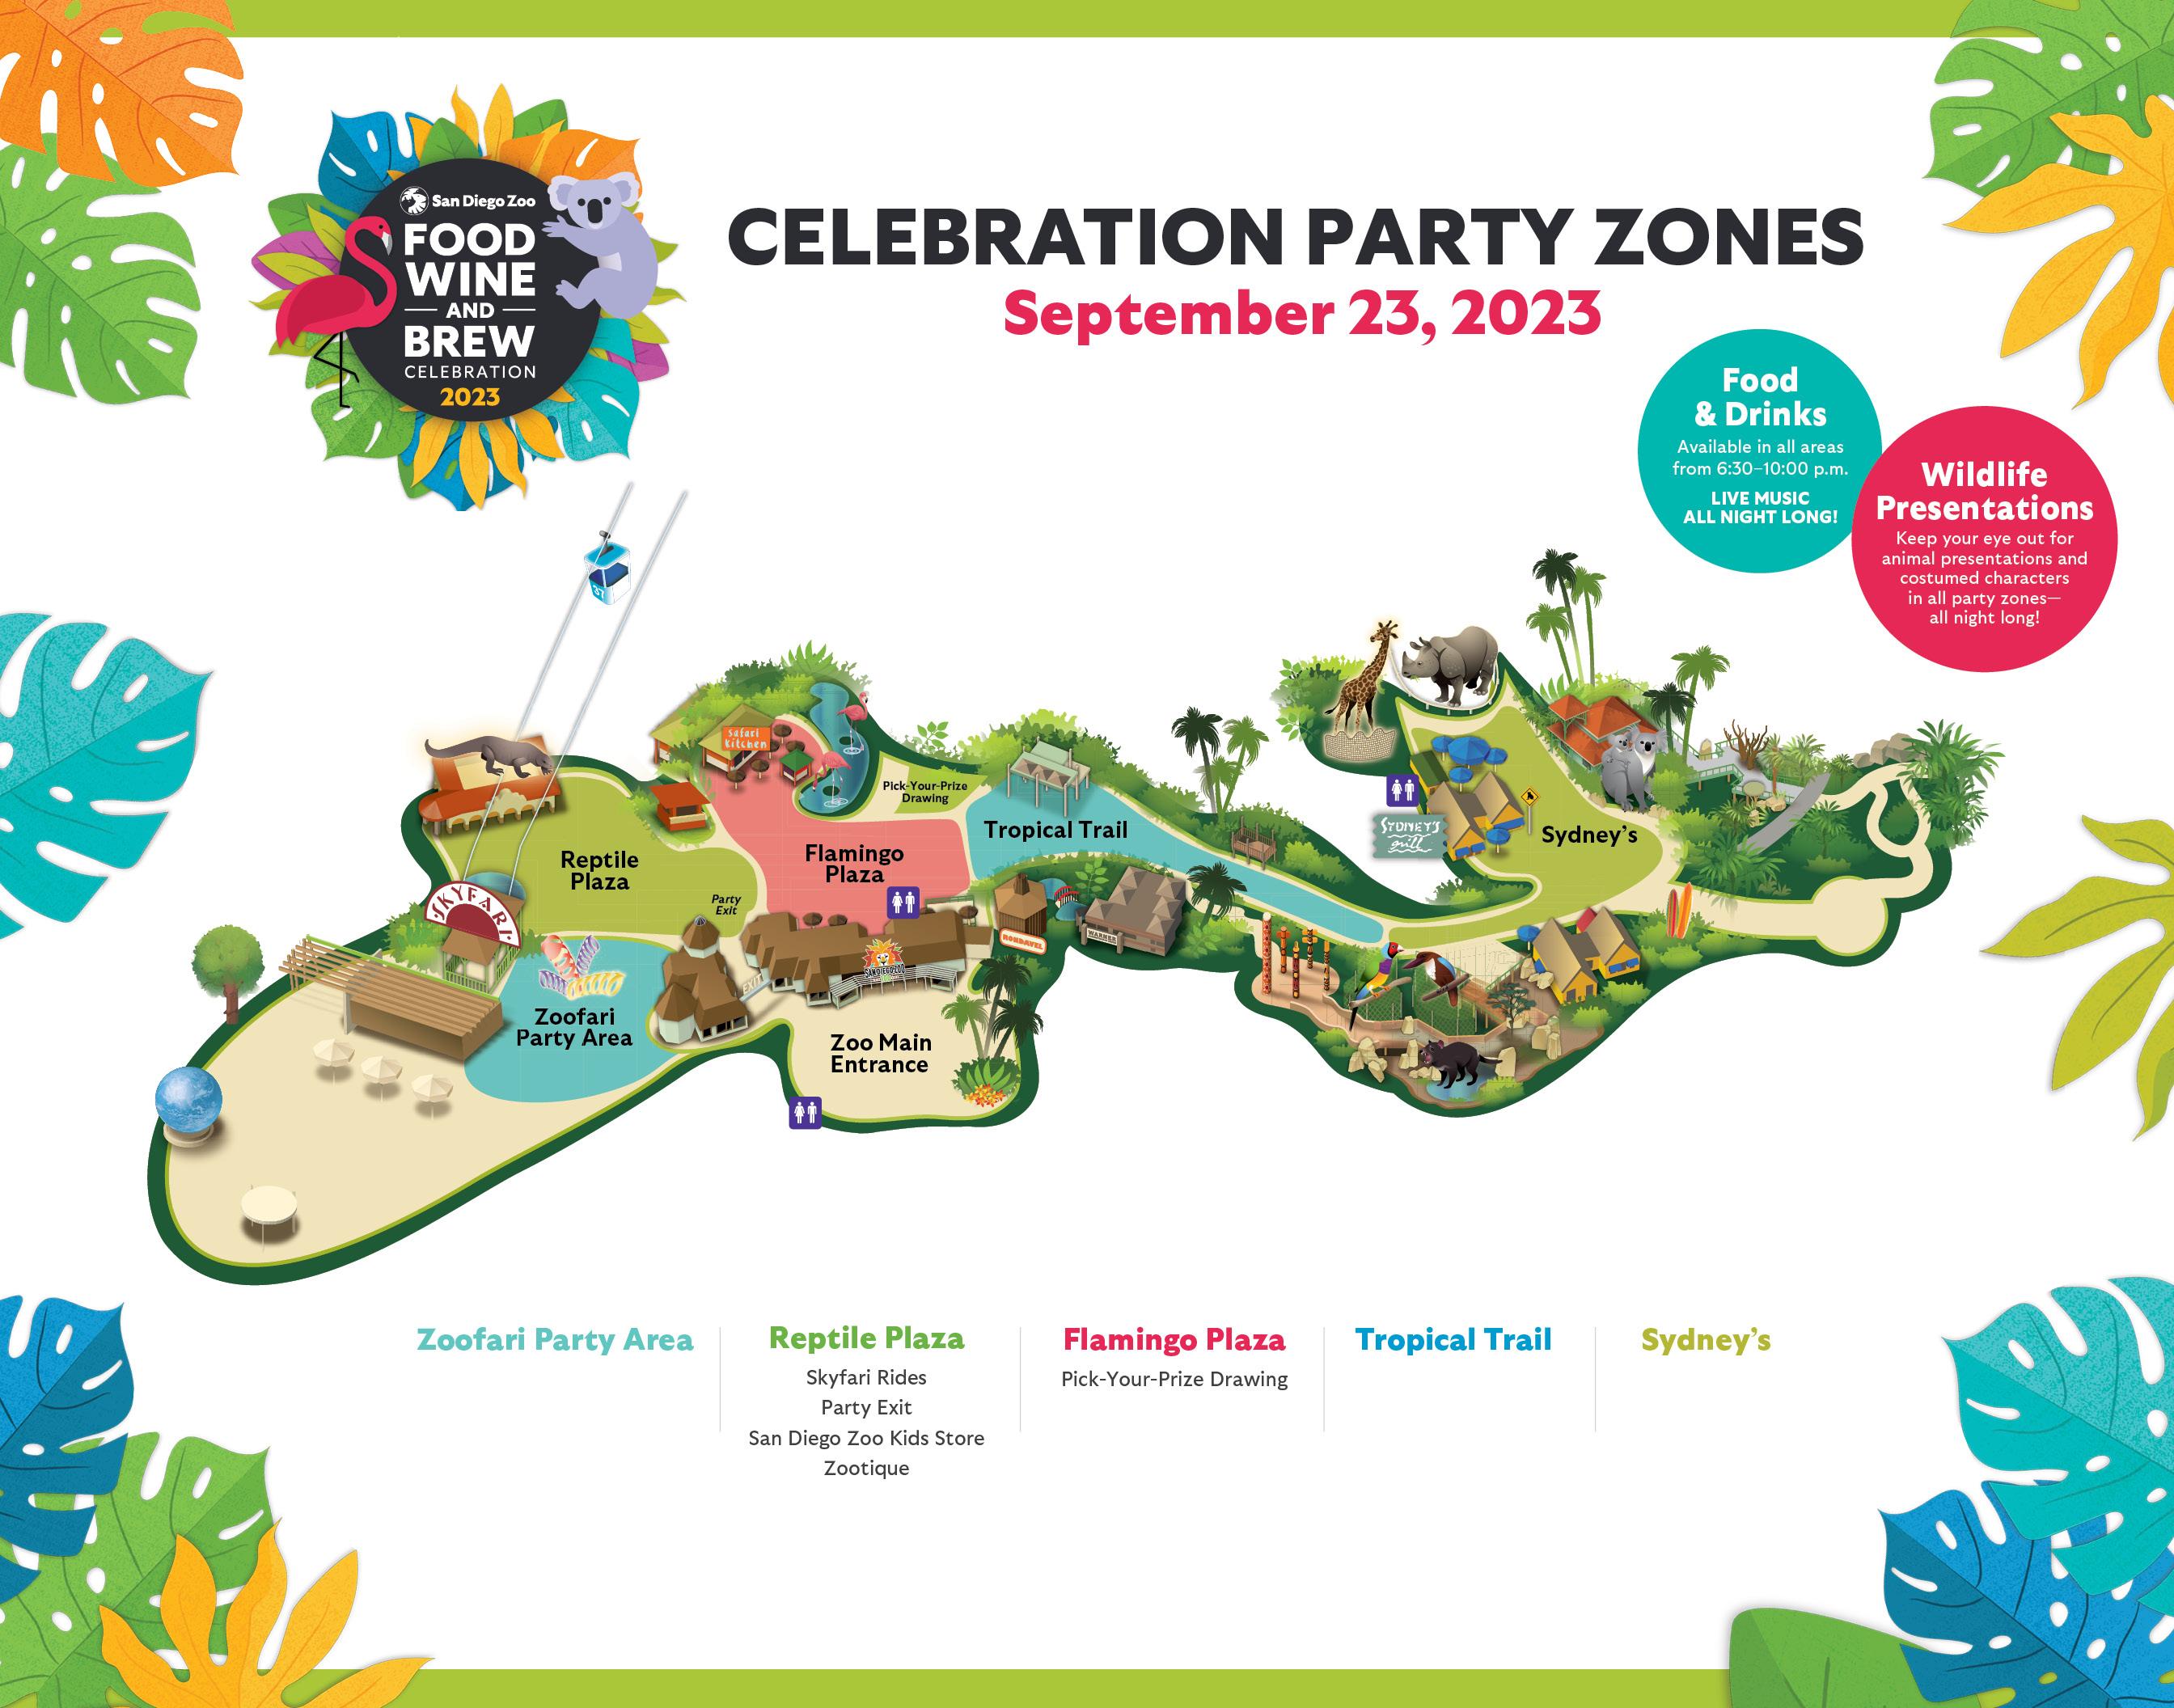 Celebration Party Zones map